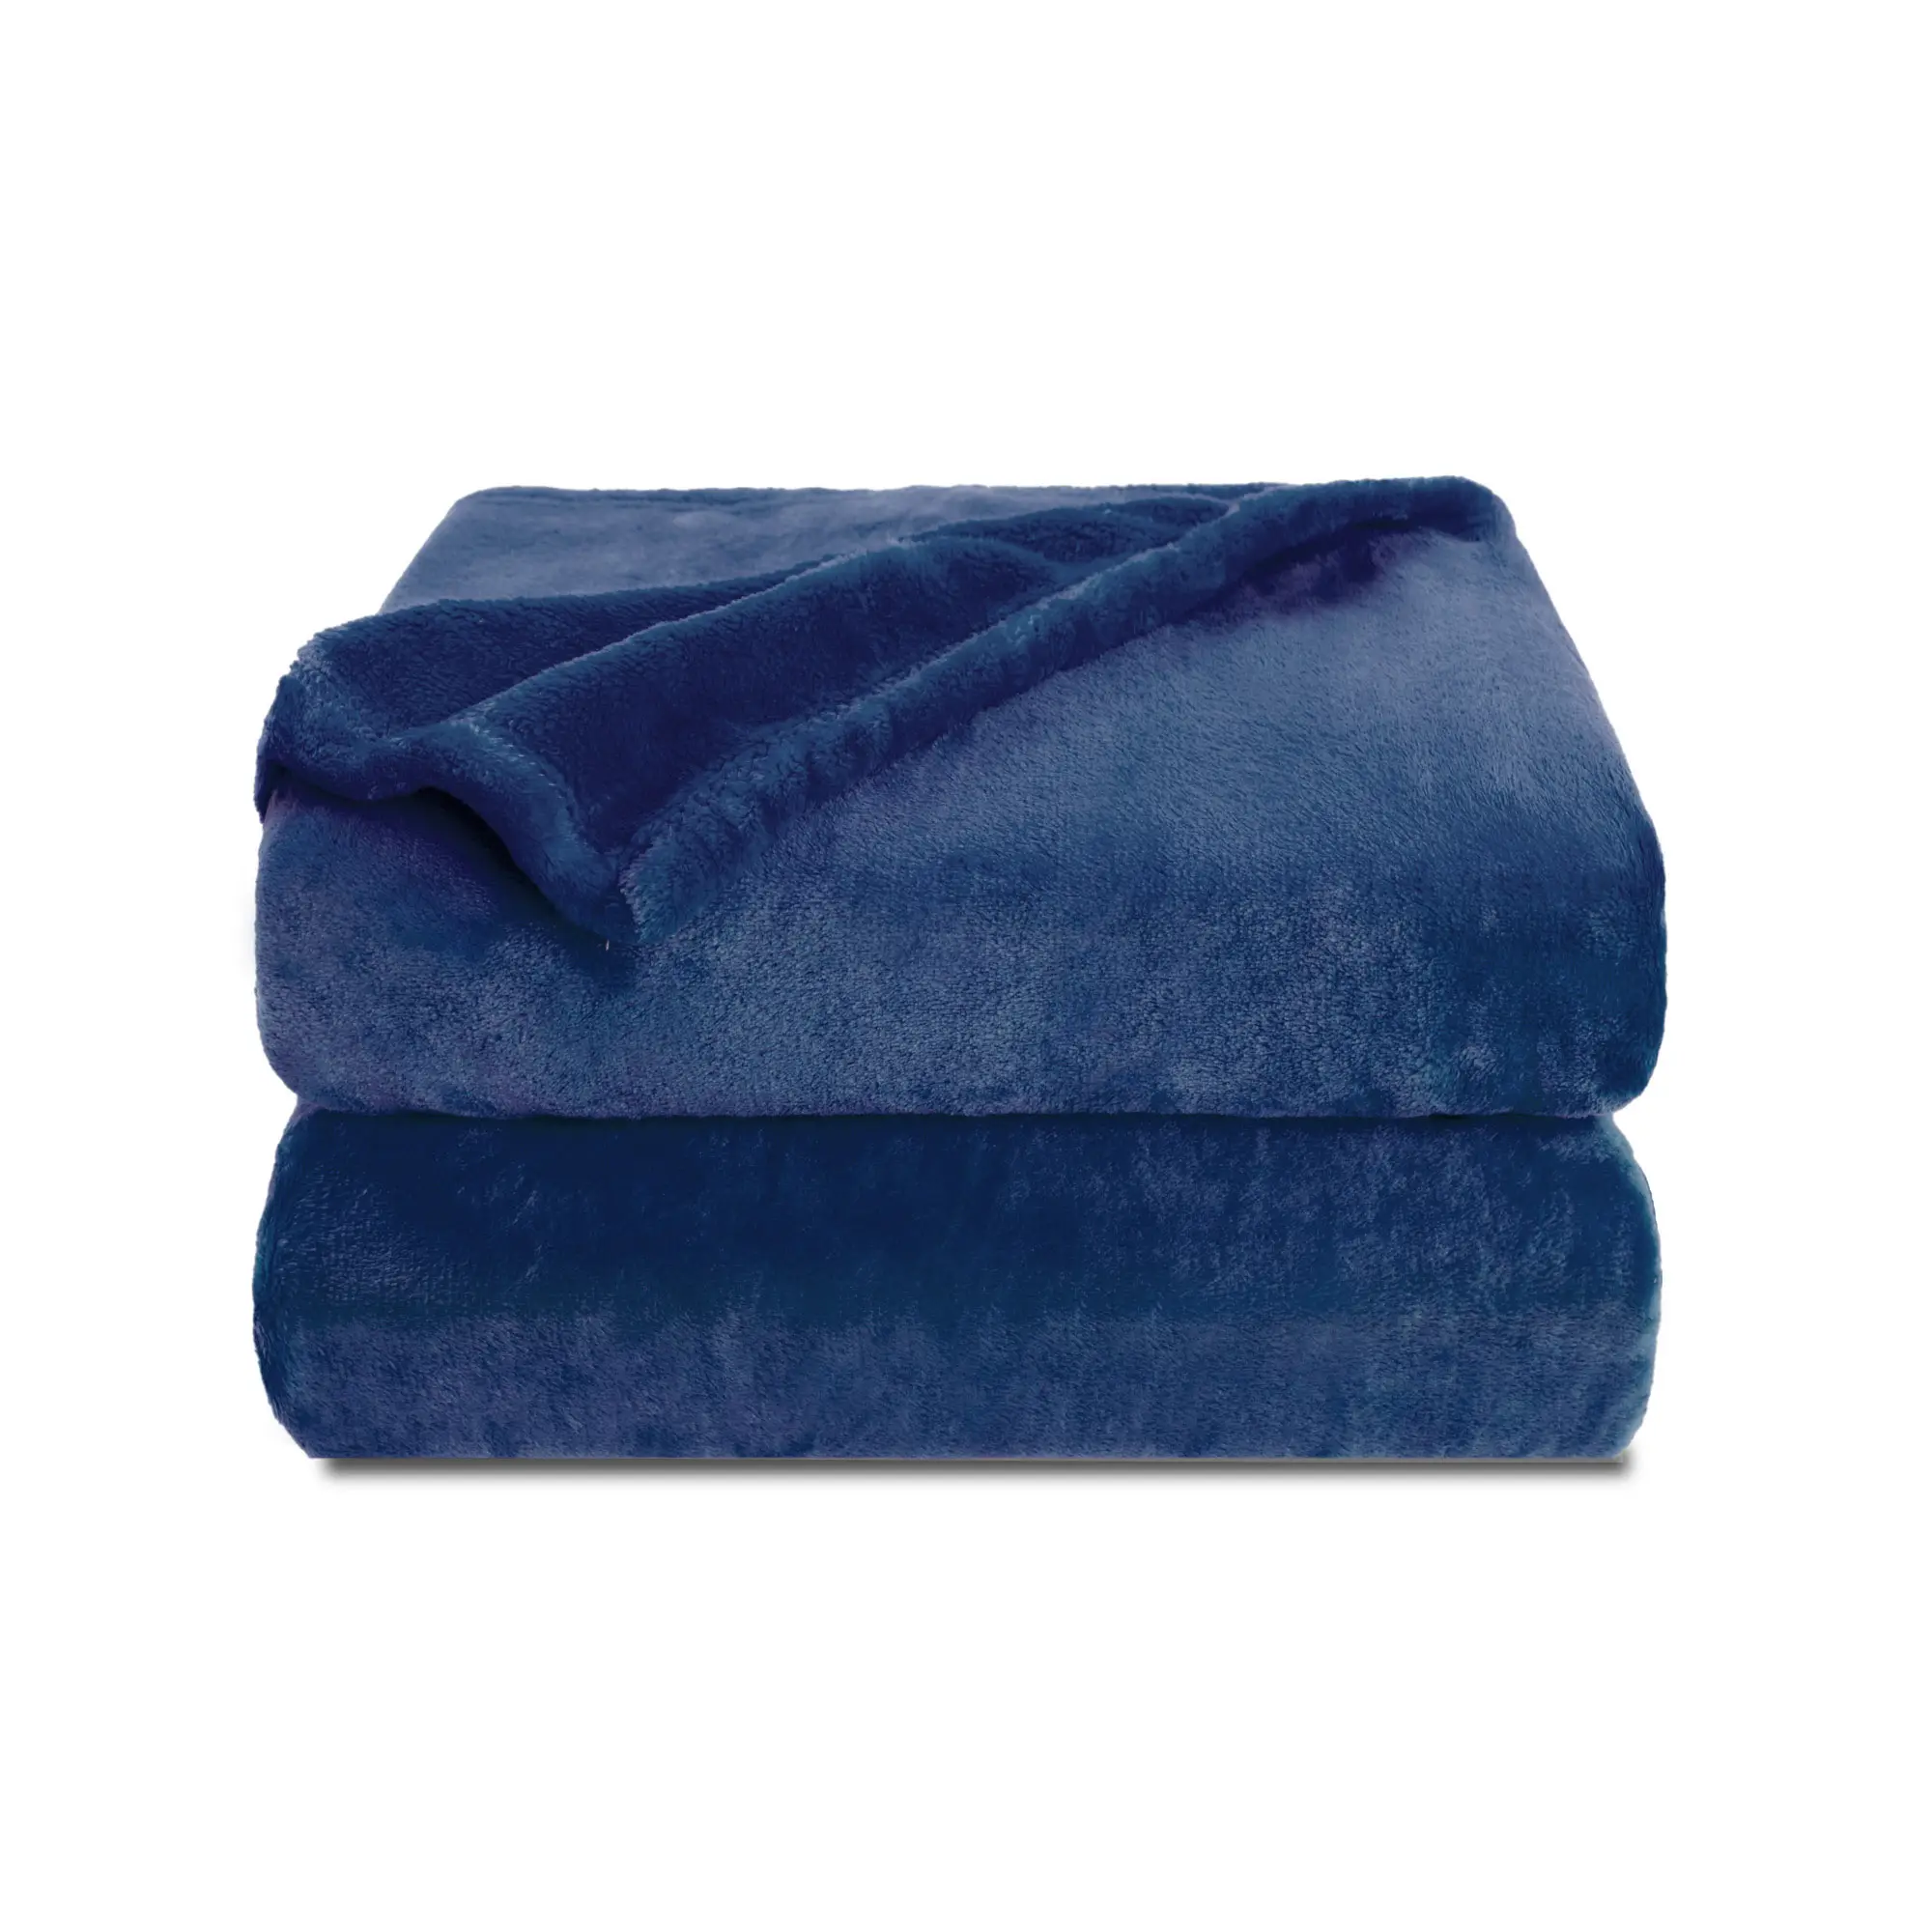 Fleece Blankets  Super Soft Flannel Queen Size Blanket for Bed  Luxury Cozy Microfiber Plush Fuzzy Blanket